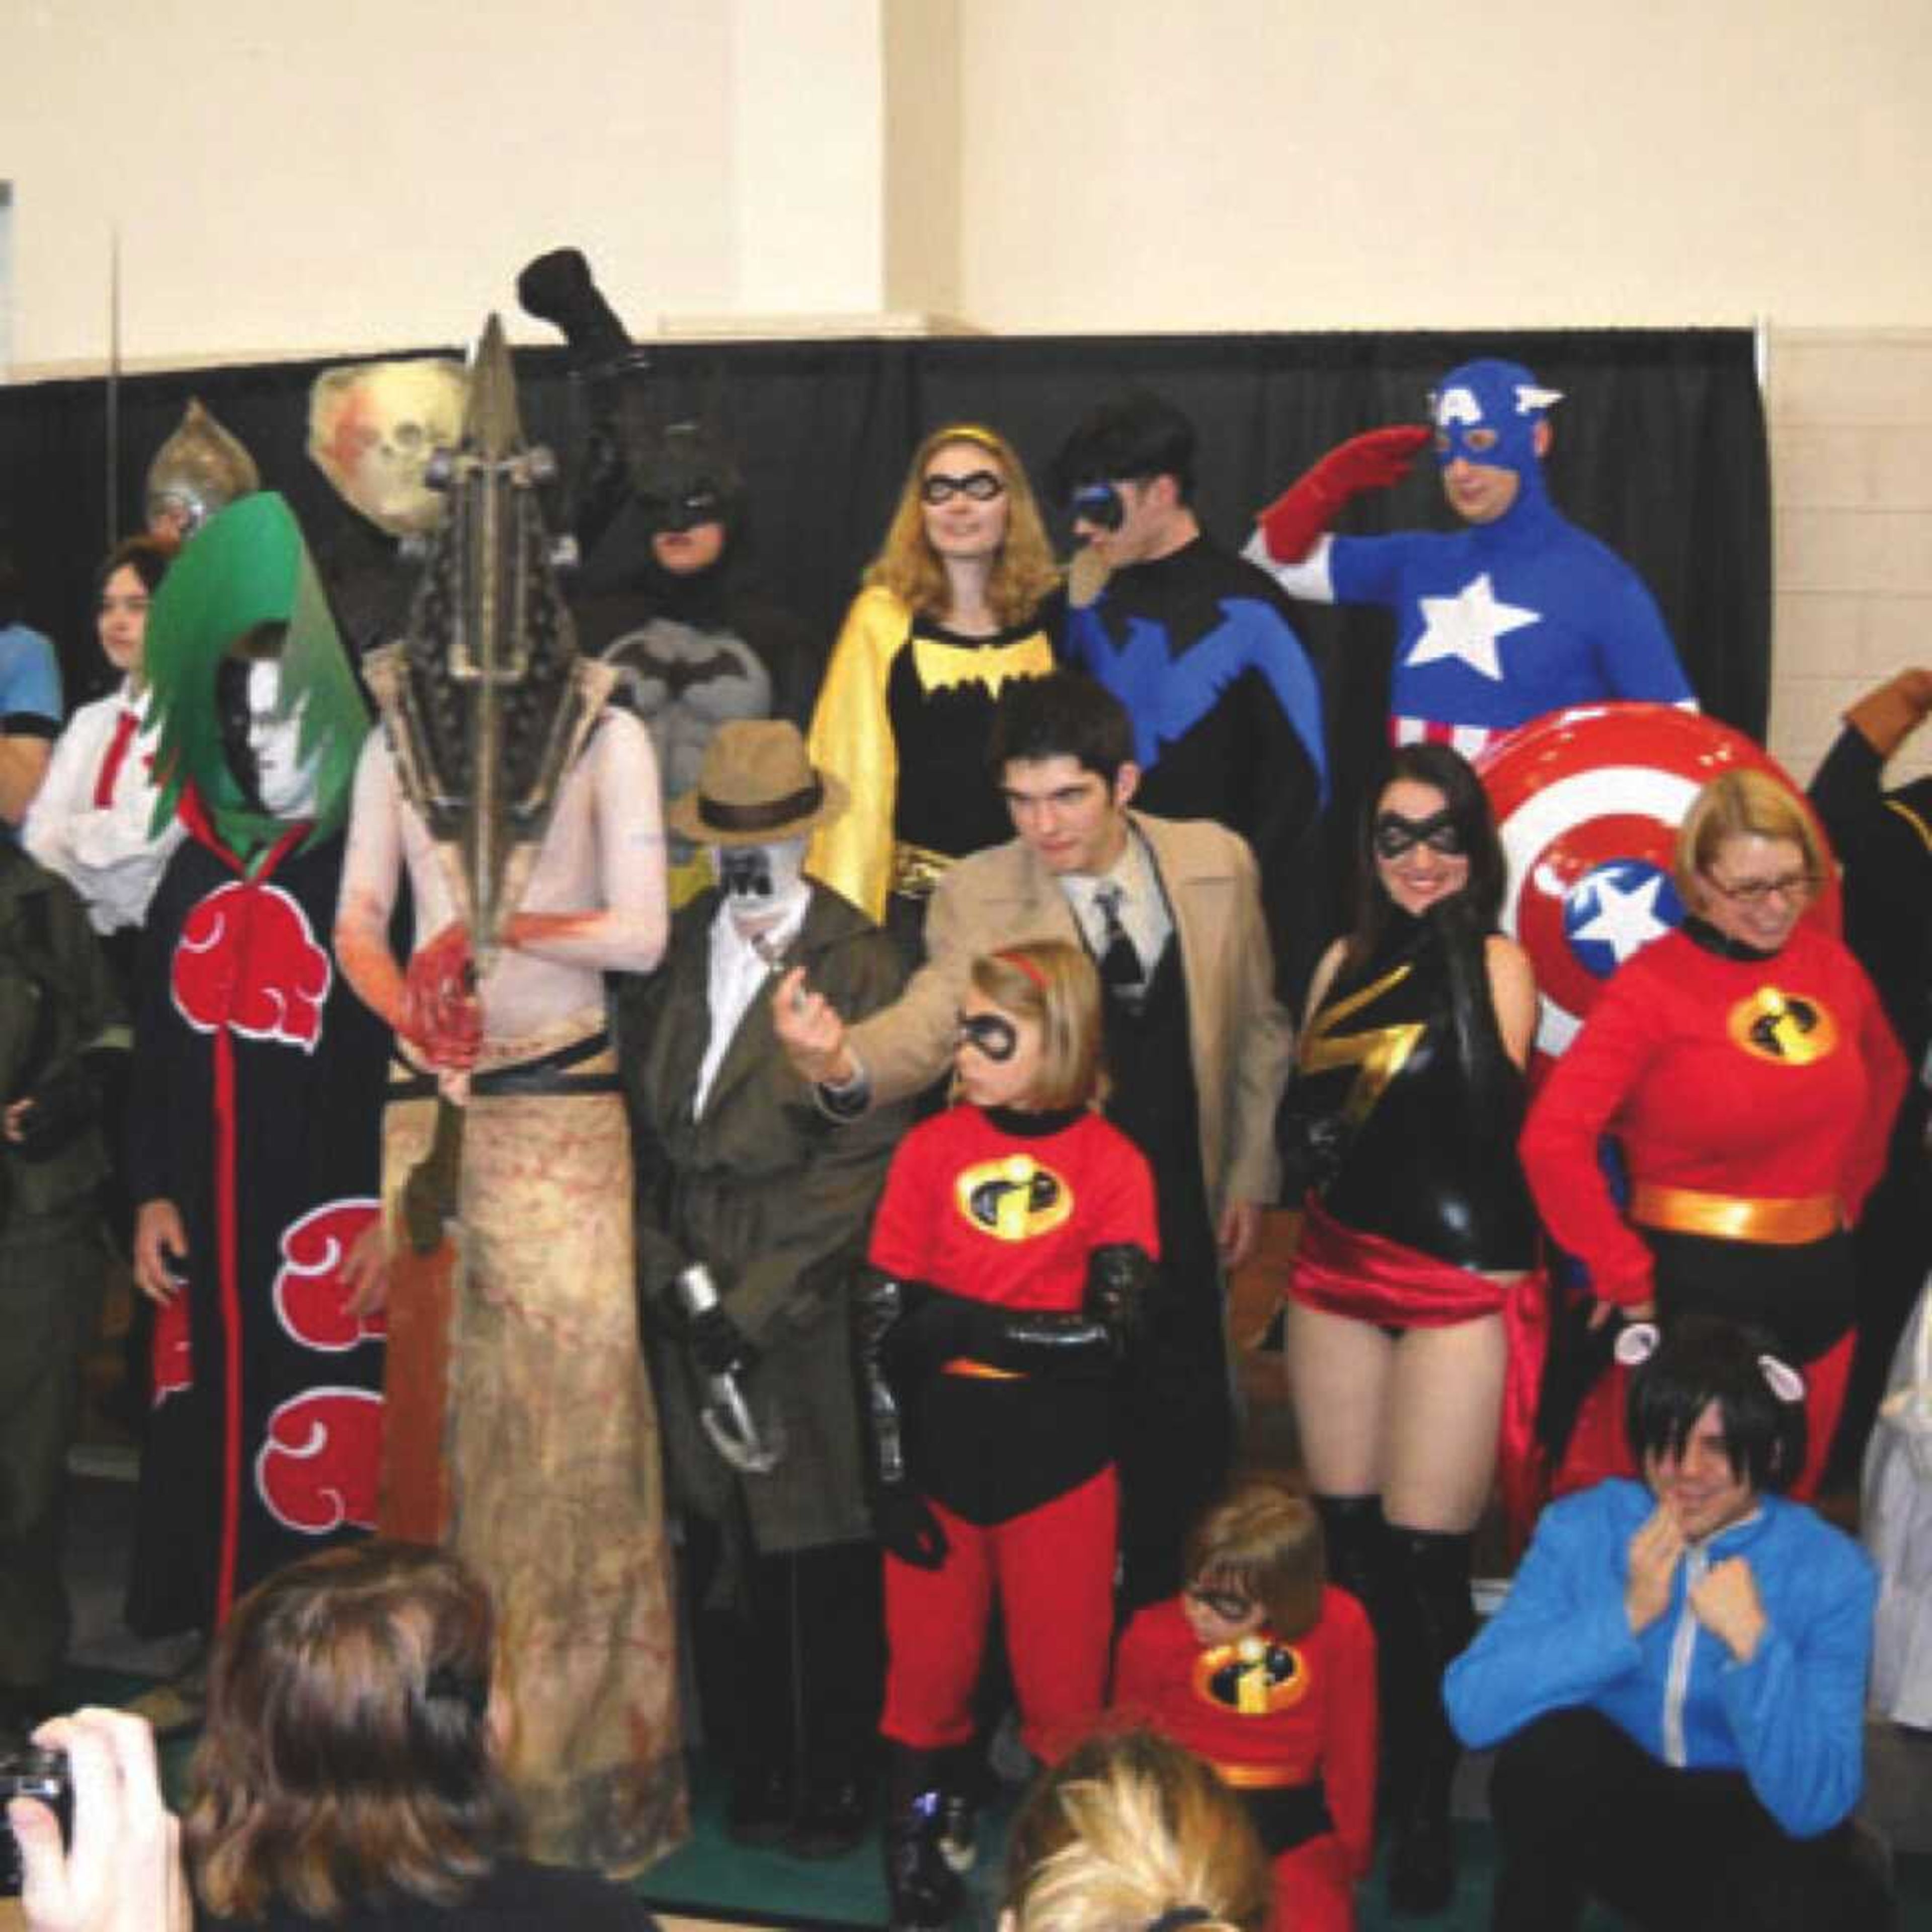 Costume contest participants pose for a photo at a past Cape Comic Con.